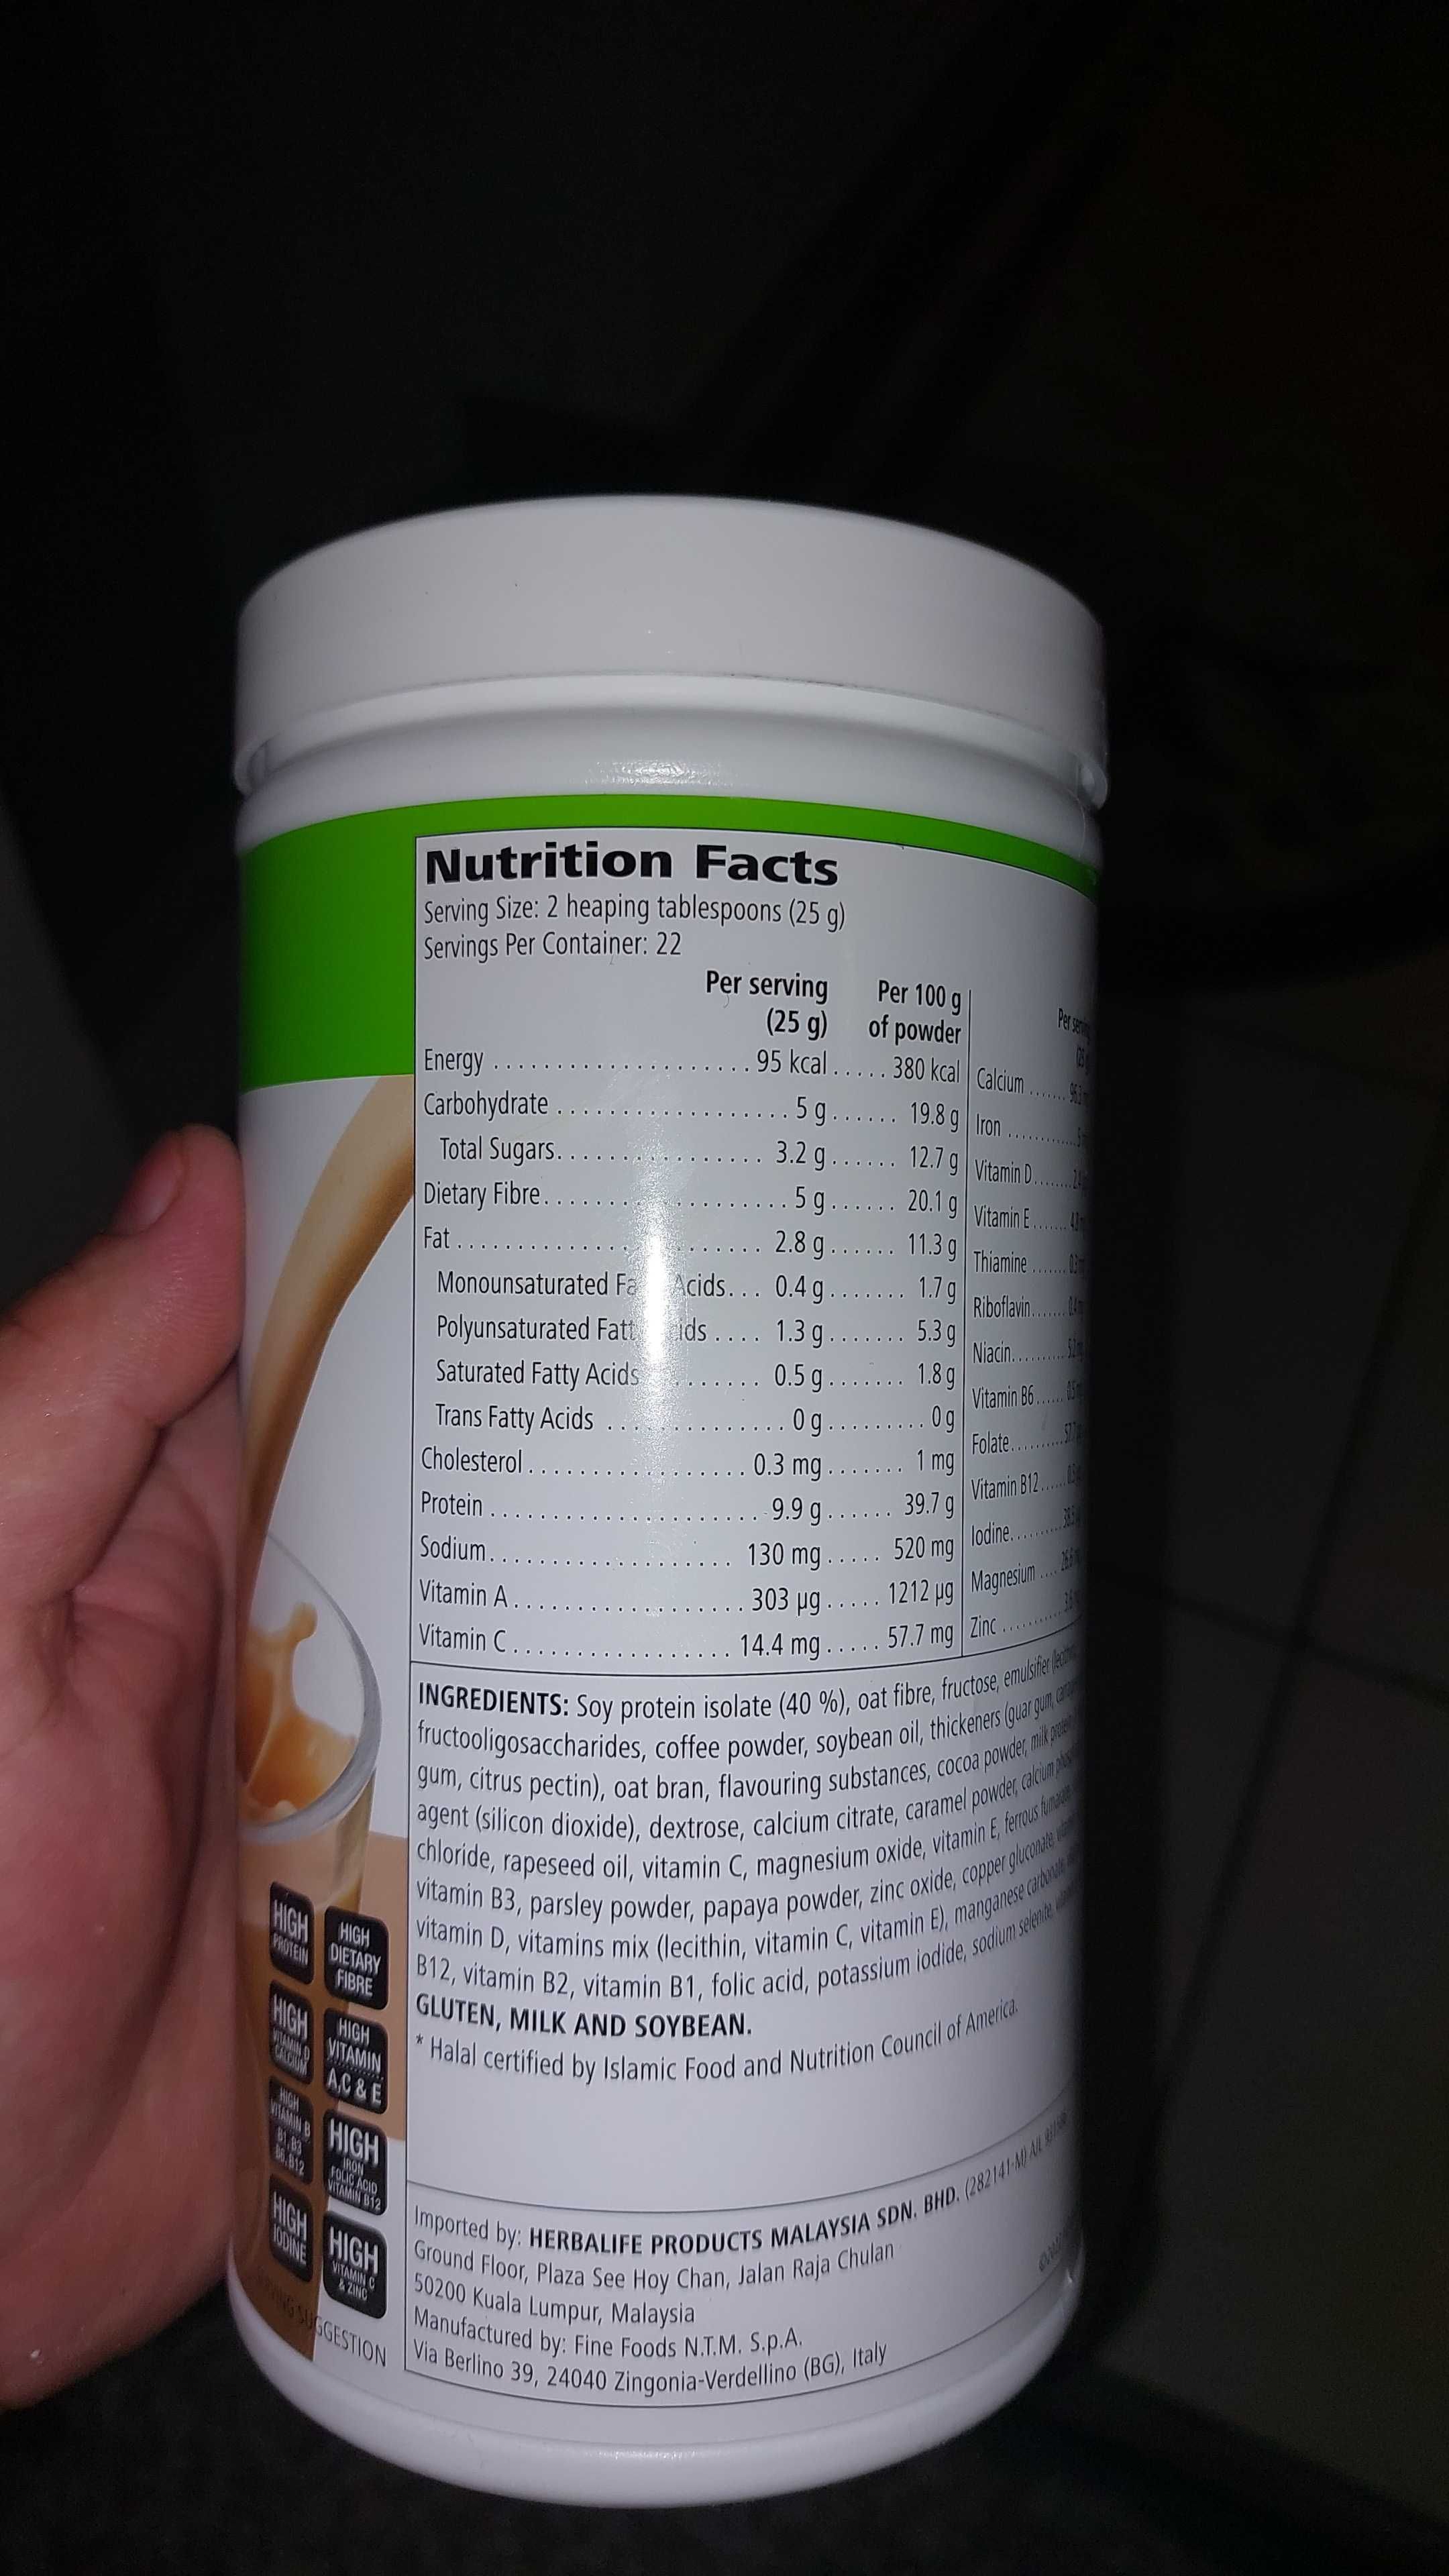 SUPER oferta Herbalife nutriție formula1 550g preț... 80 lei buc 5x1 g